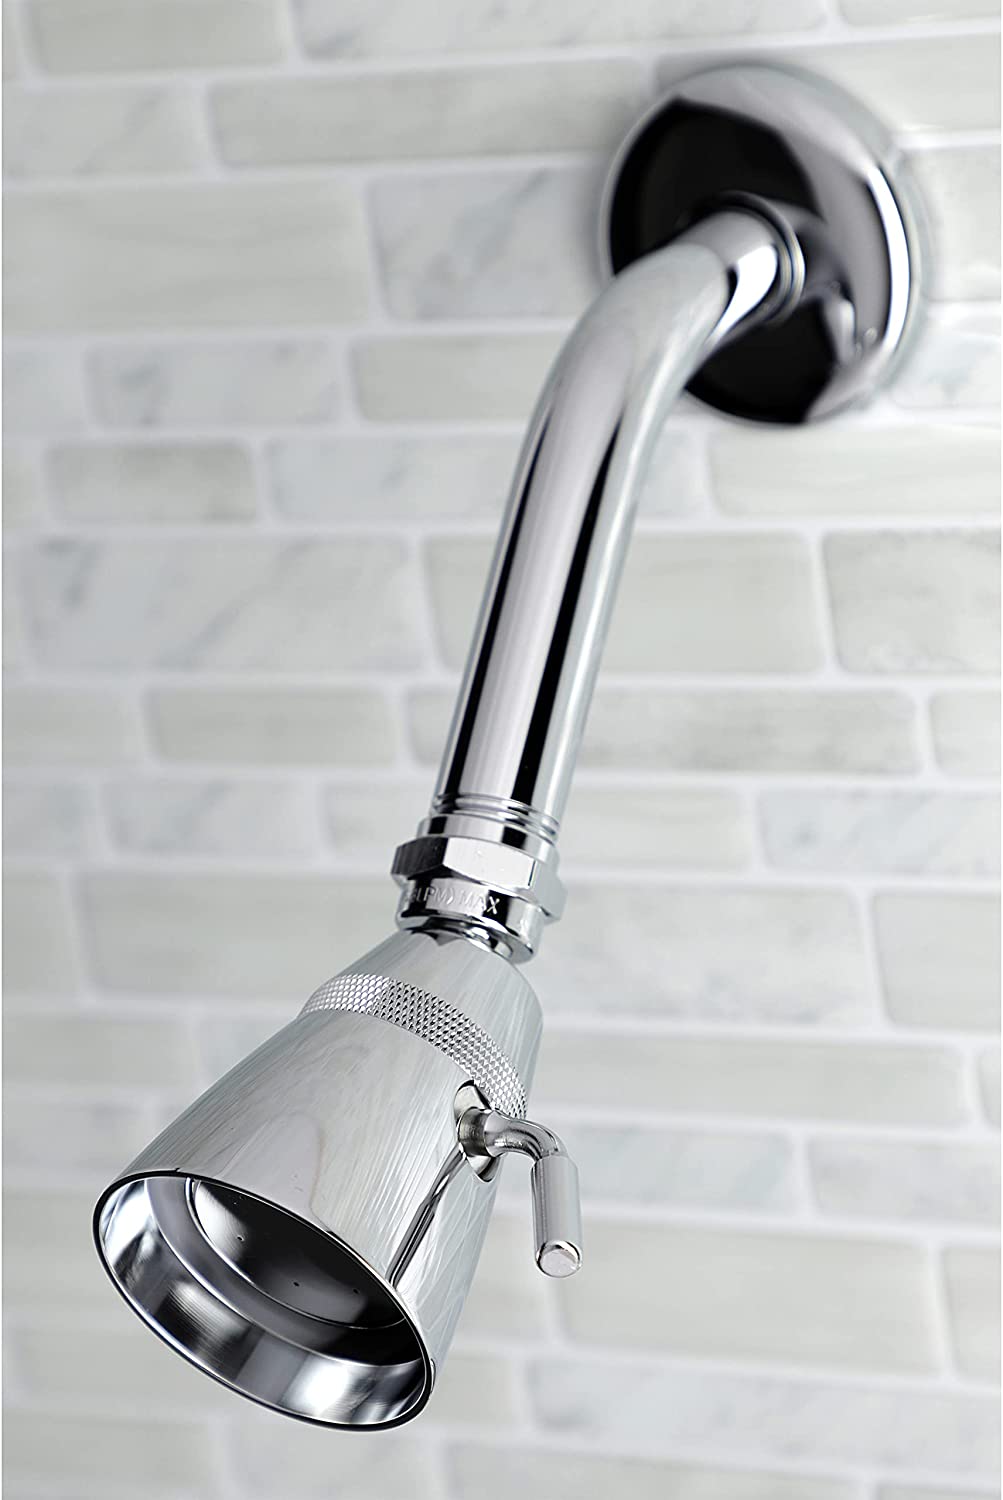 Kingston Brass KB2631NLSO Shower Faucet, Polished Chrome